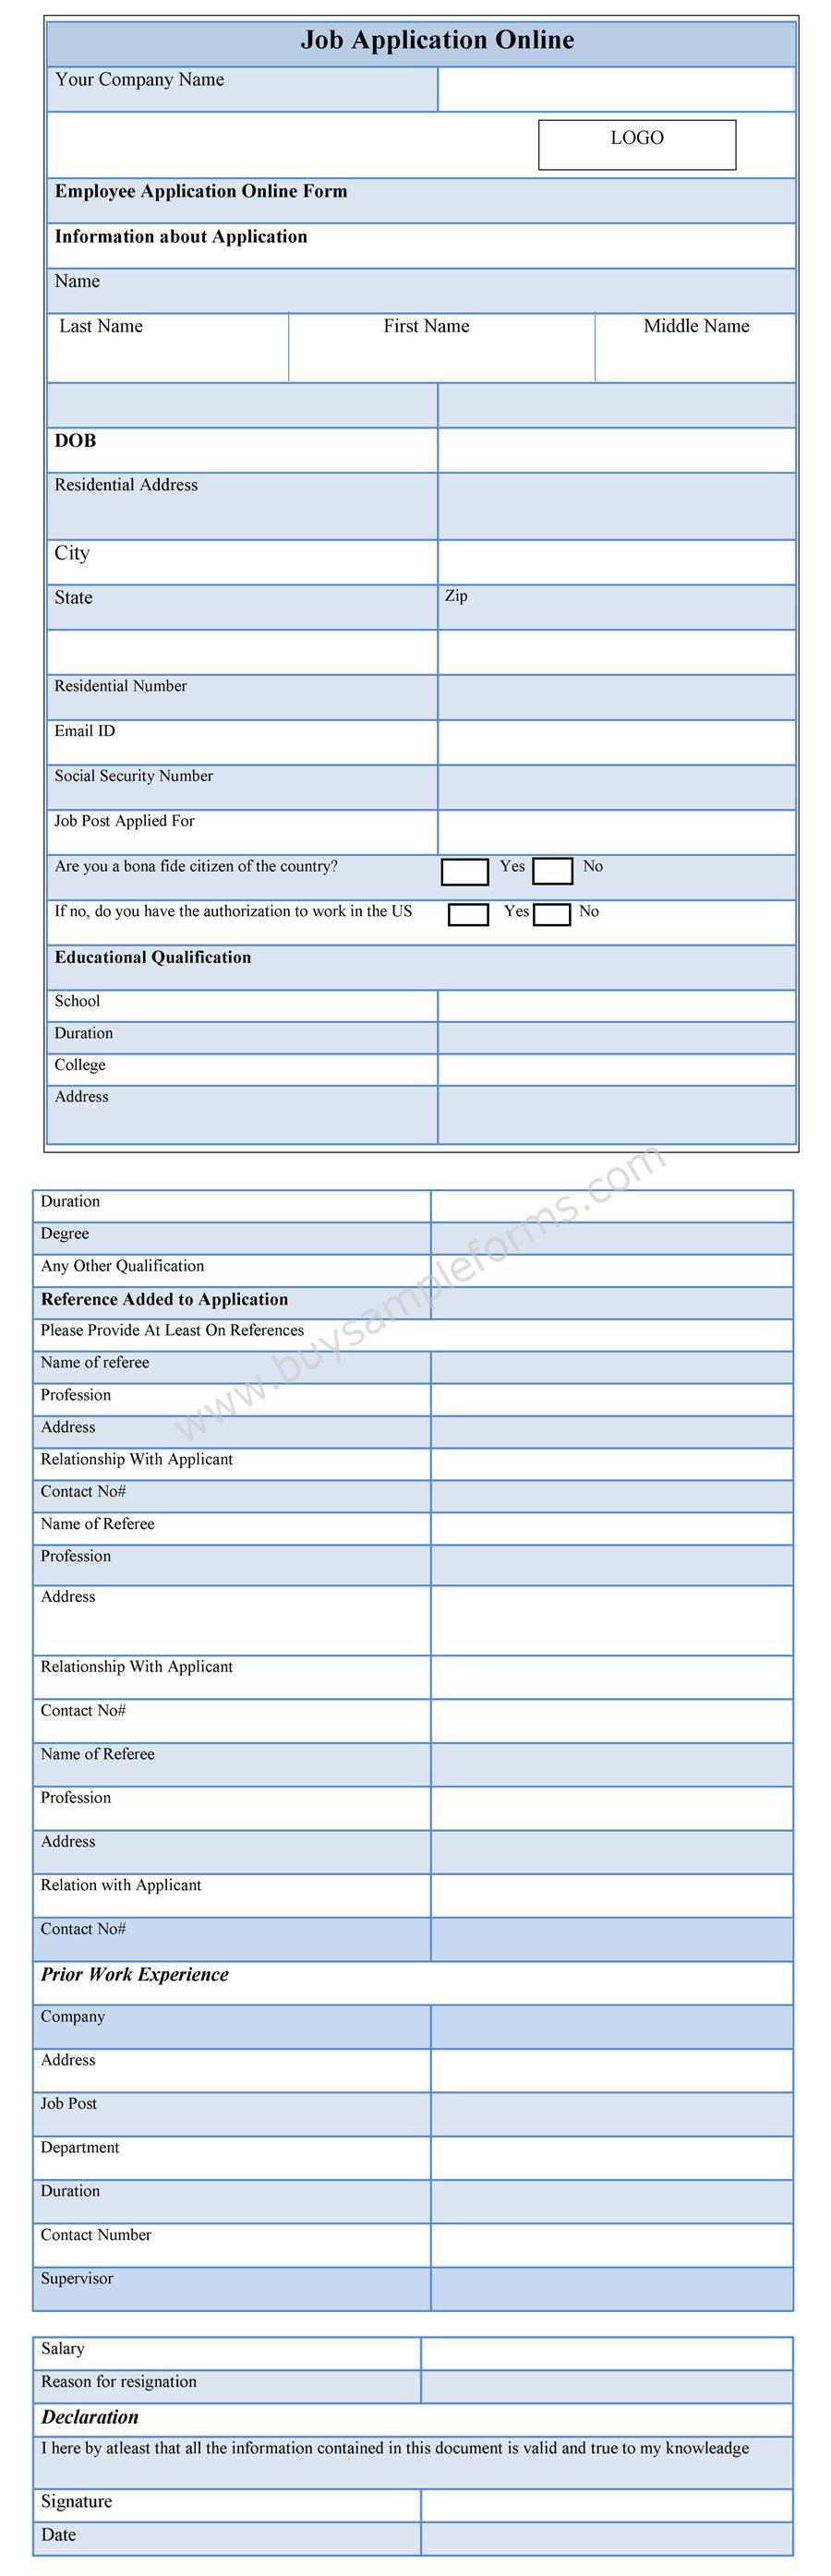 Printable Job Application Forms Online